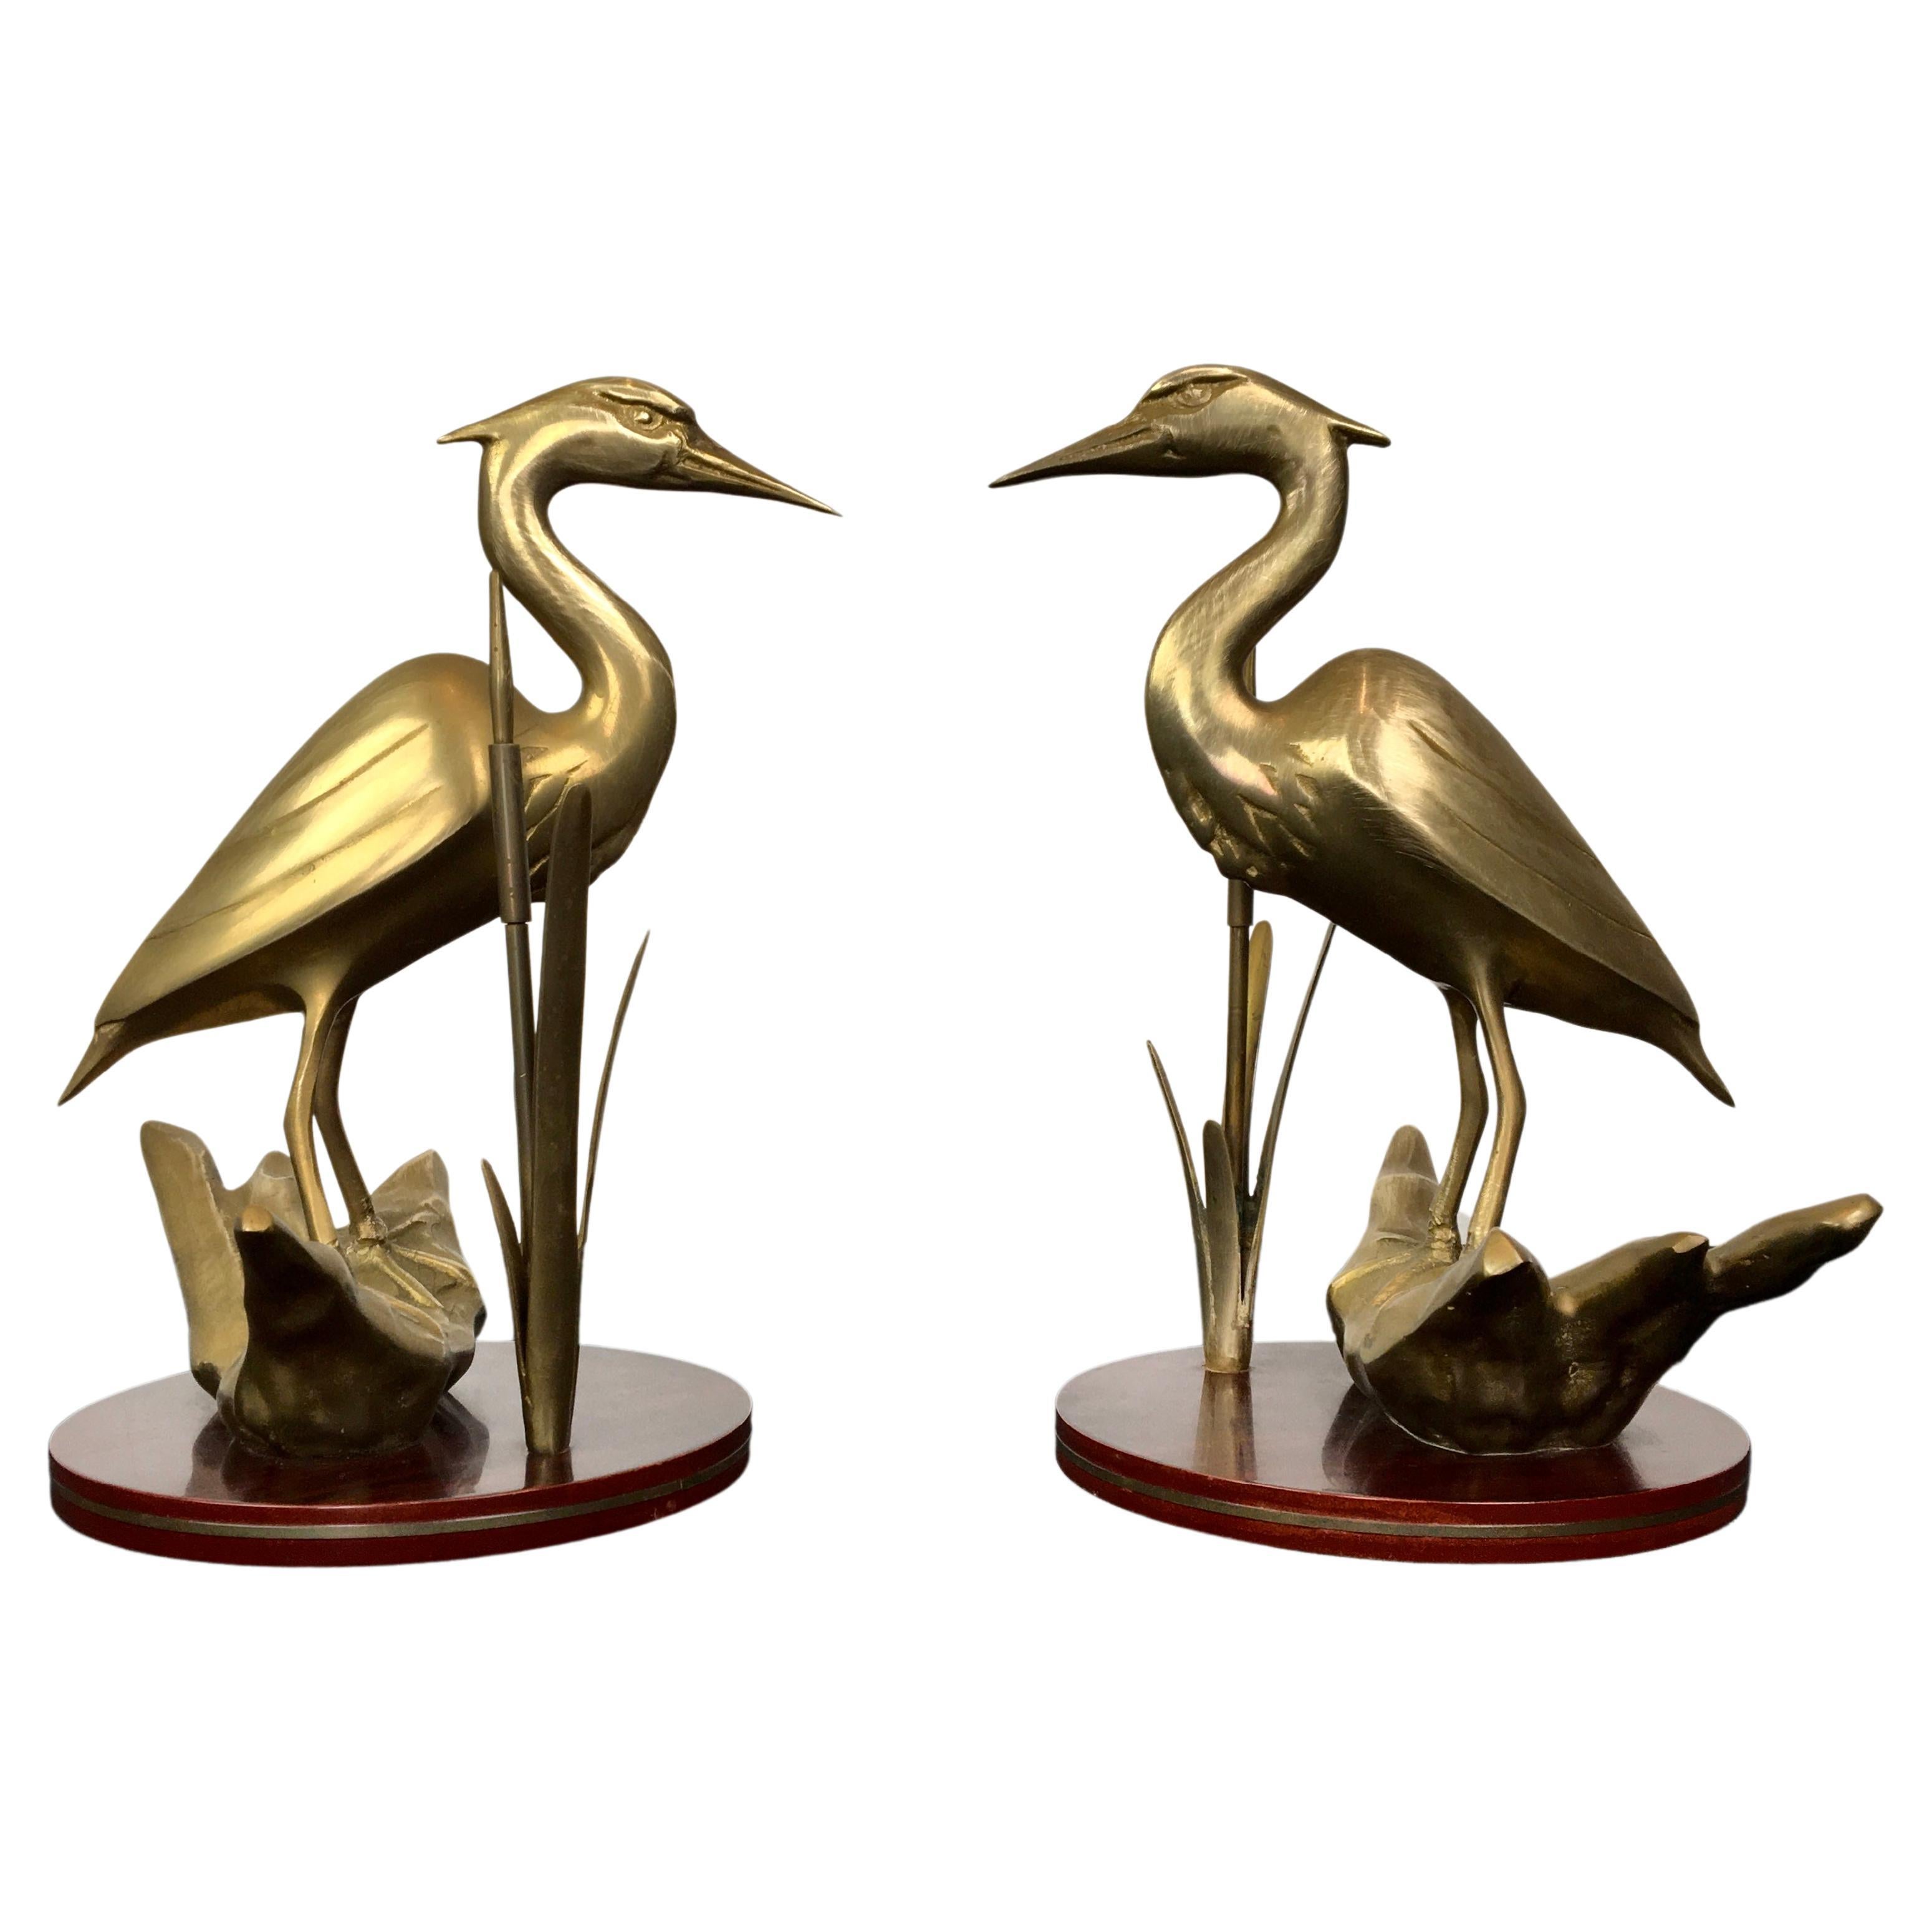 Pair of Brass Cranes Sculptures on Wood